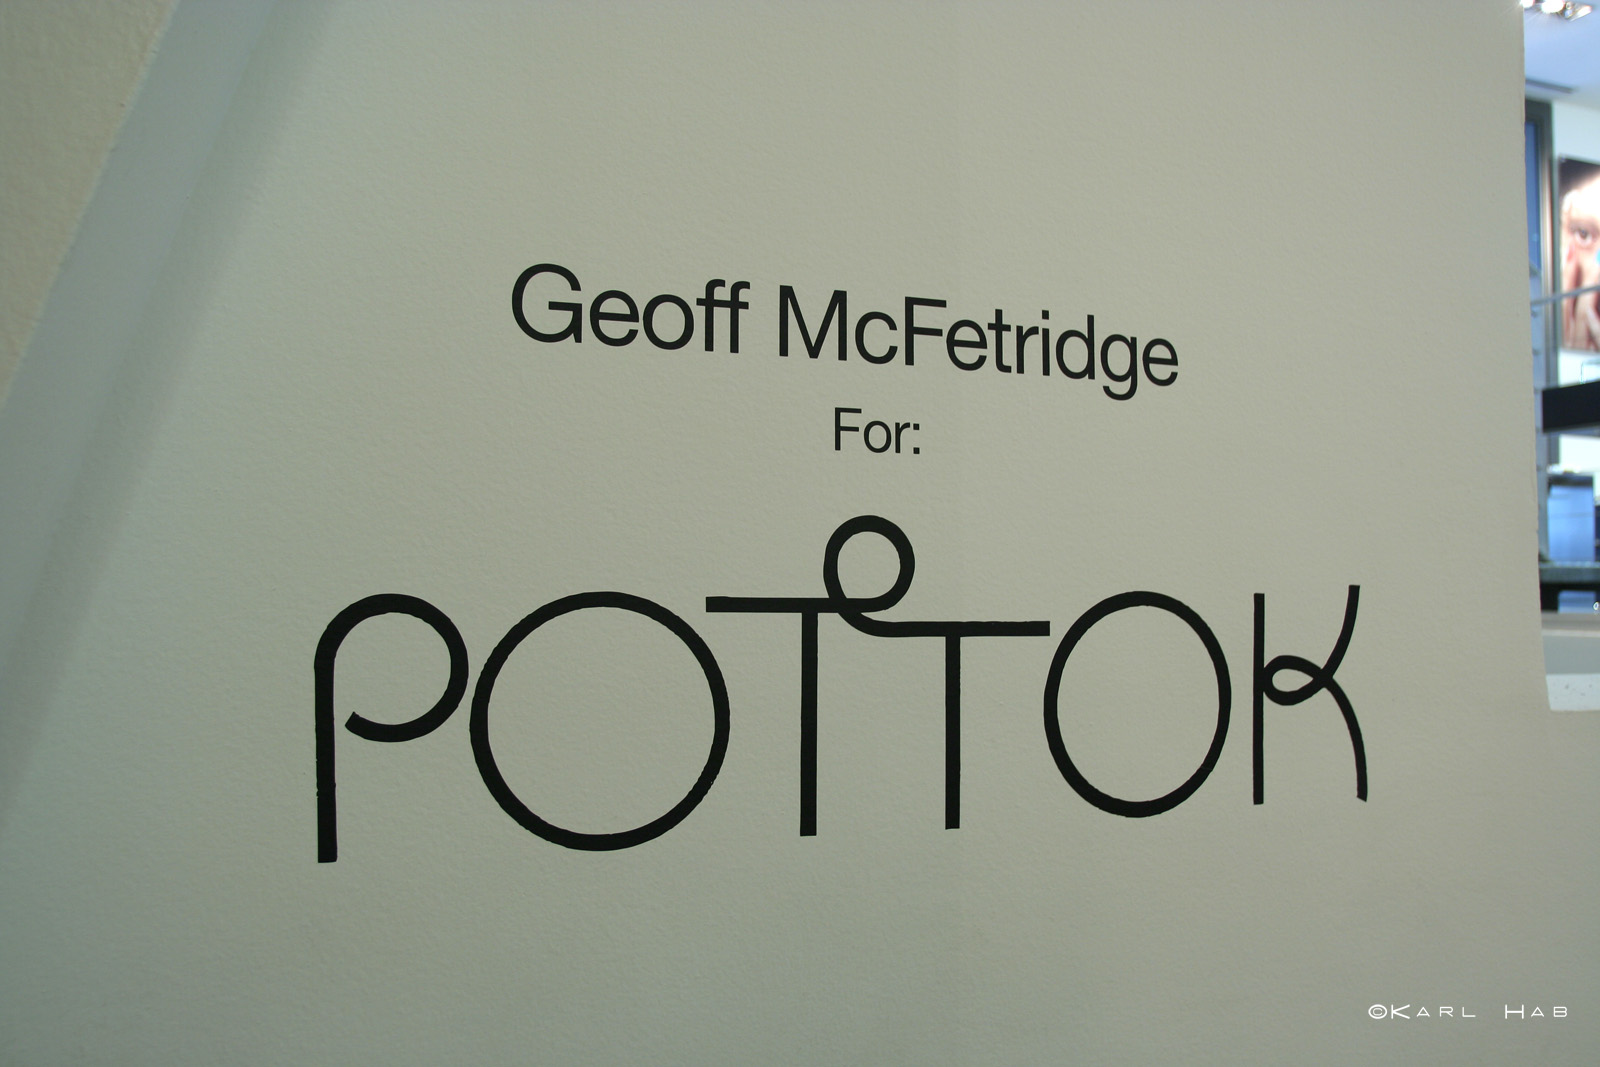 Pottok Wallpaper By Geoff Mcfetridge At Colette Mcfe